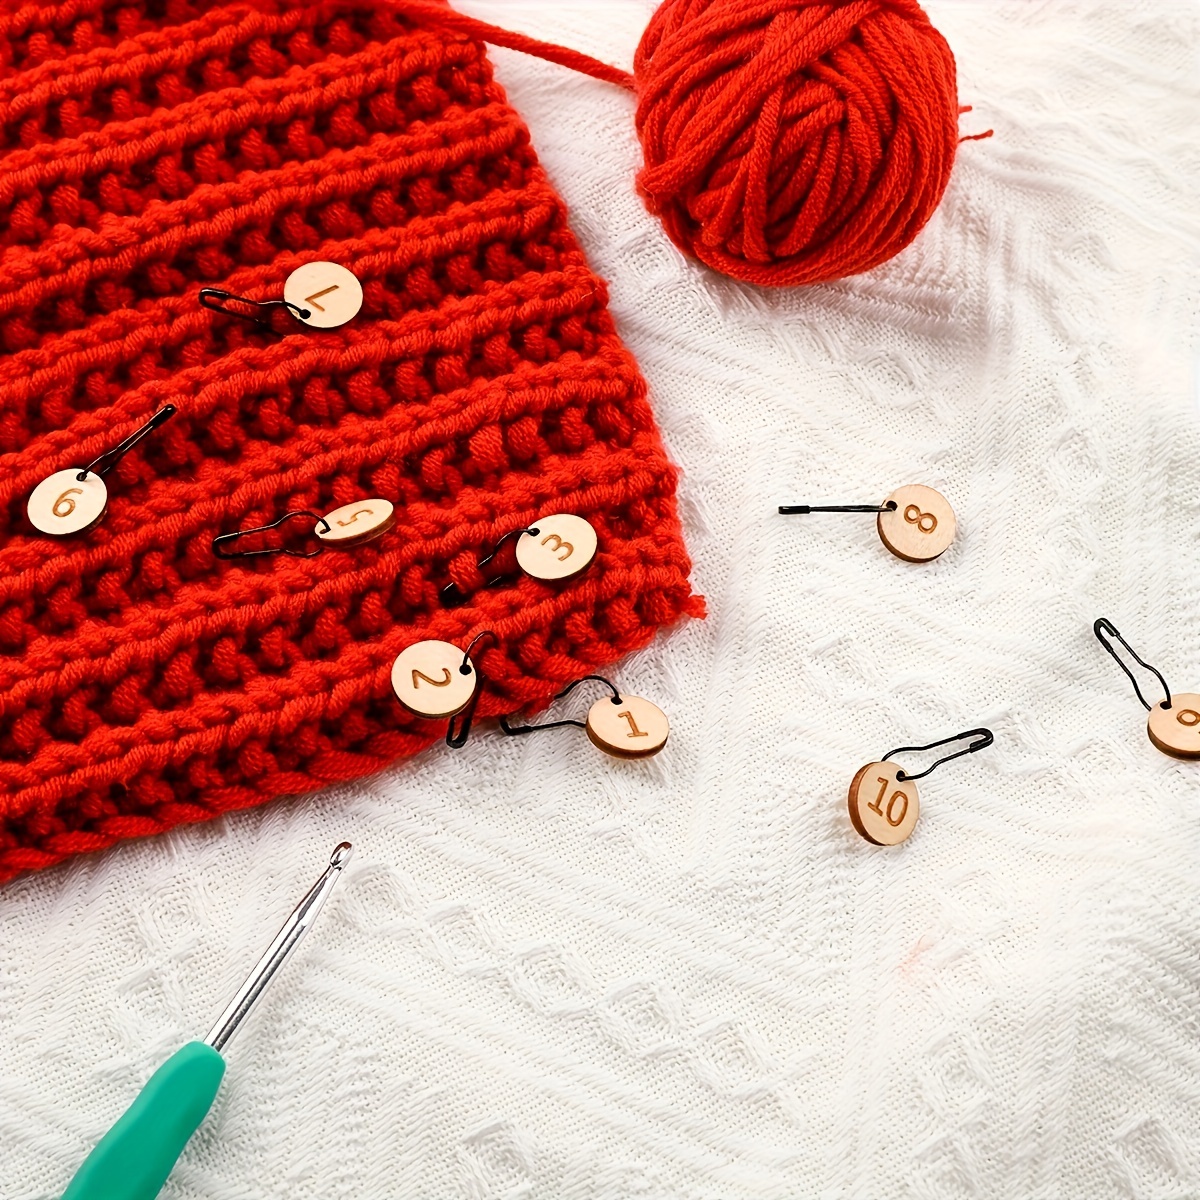 Pin on Knitting Supplies